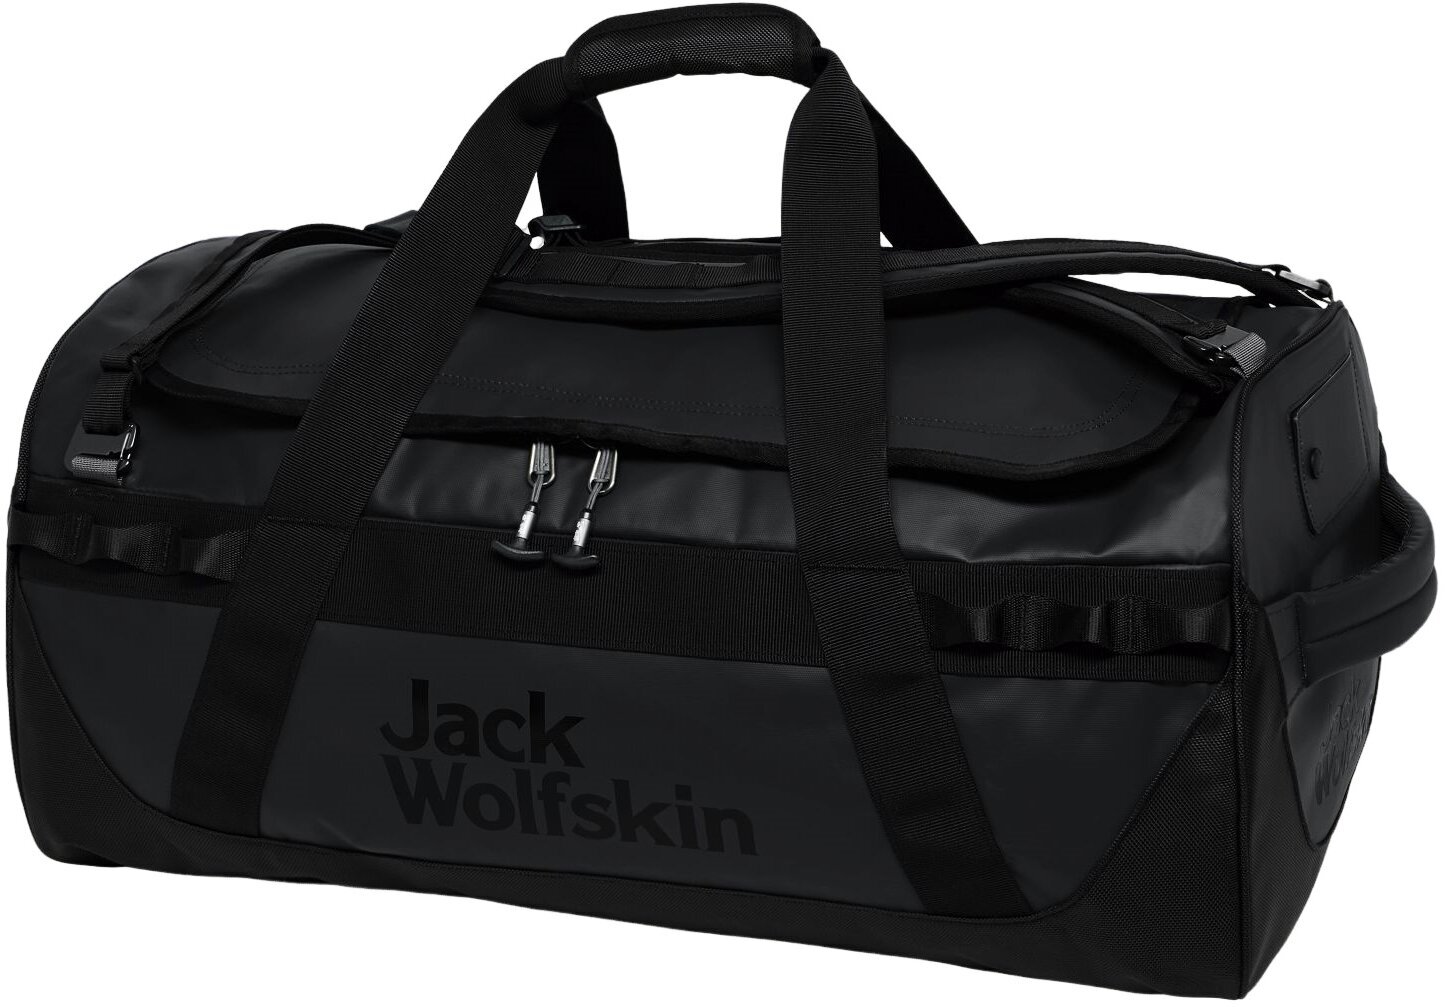 Outdoor Backpack Jack Wolfskin Expedition Trunk 65 Black Outdoor Backpack